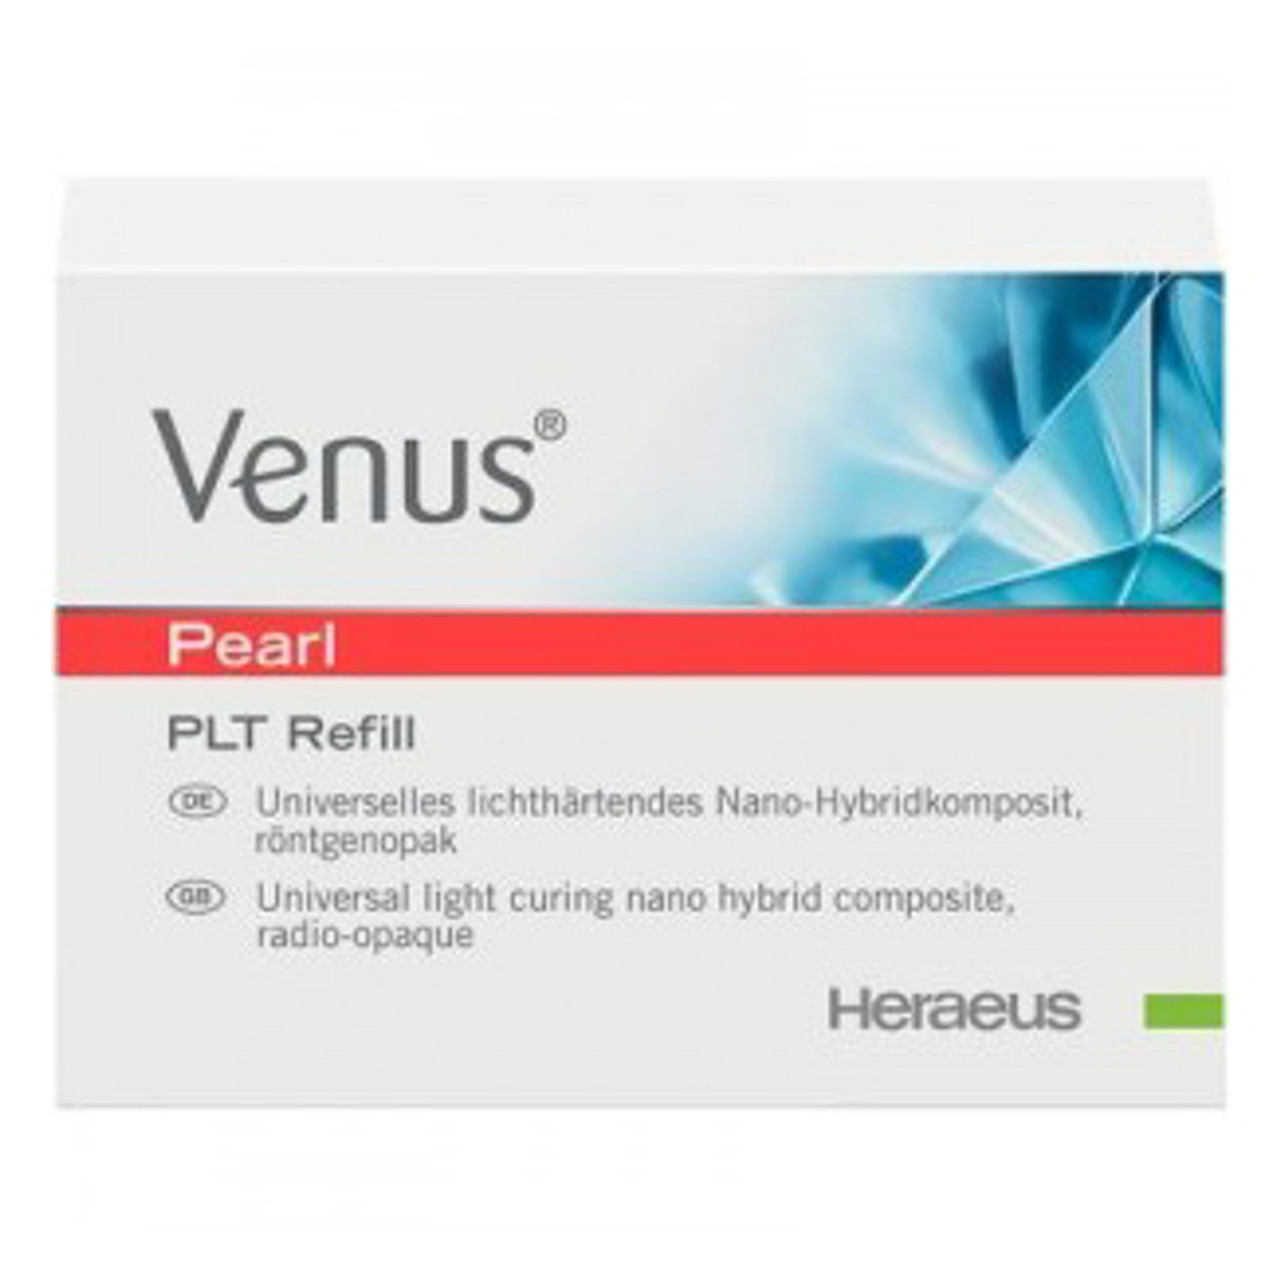 Venus Pearl PLT Refill 20/Pk A4